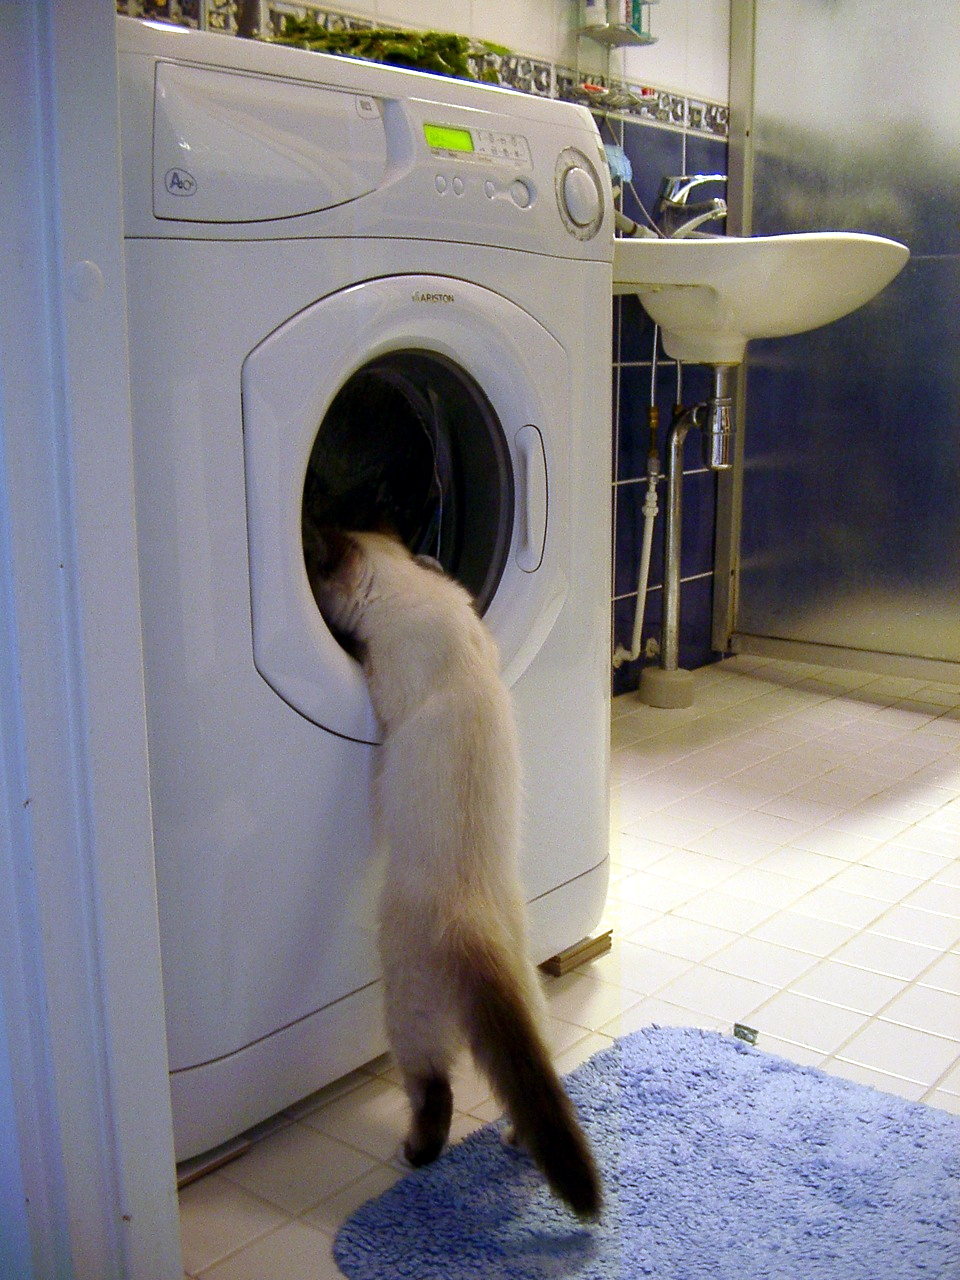 Cat_investigates_washing_machine_2003-07-03 source: https://commons.wikimedia.org/wiki/File:Cat_investigates_washing_machine_2003-07-03.png